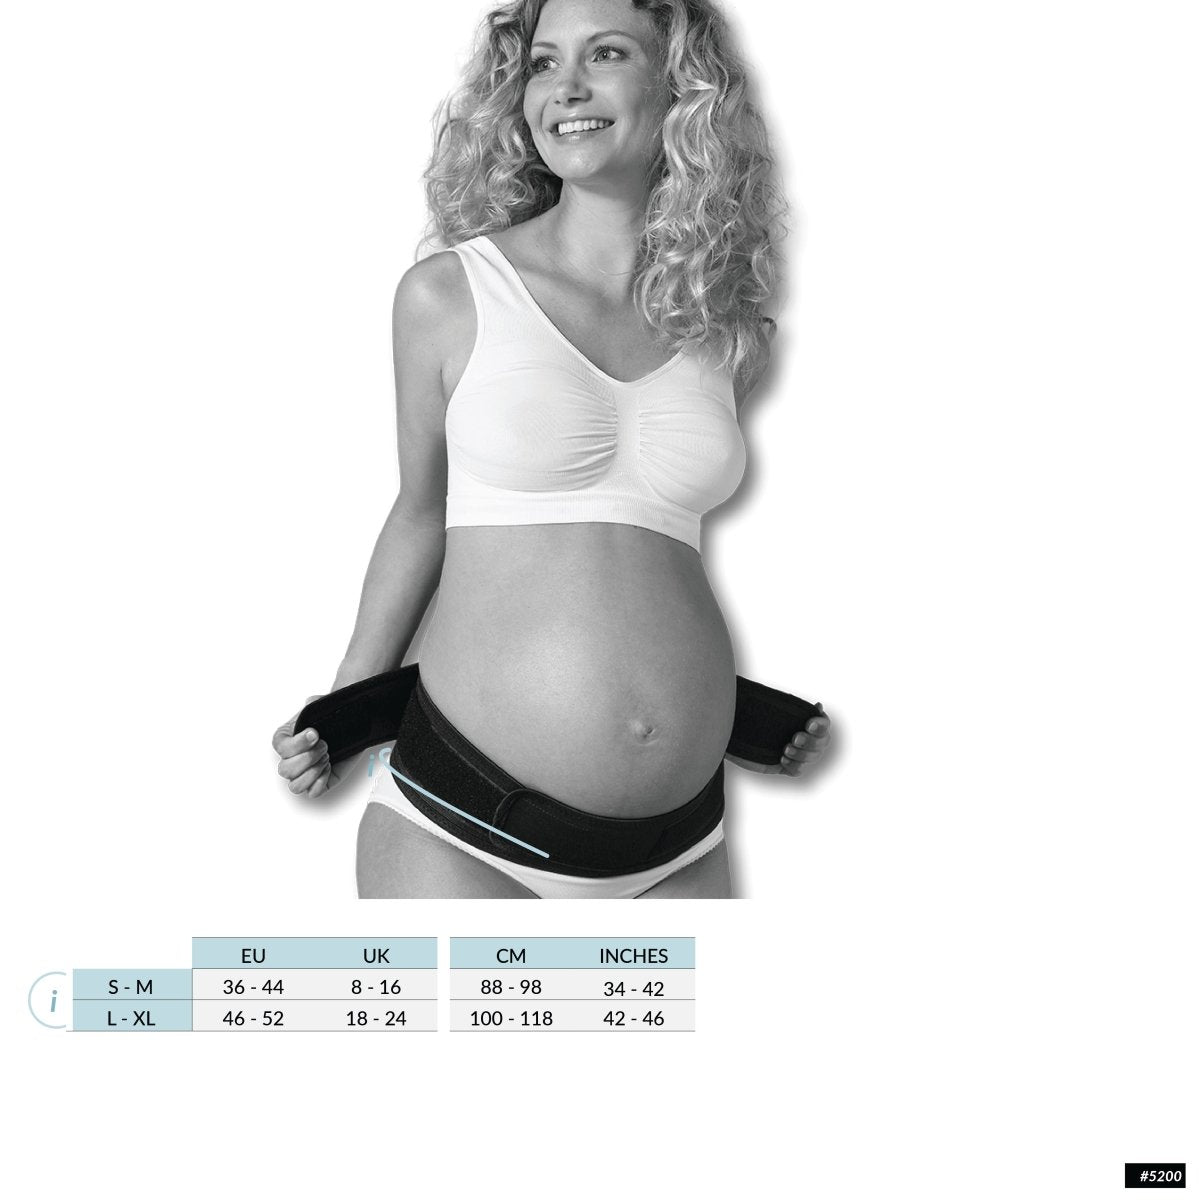 Carriwell graviditetsstøttebælte, sort - Buump - Support belt - Carriwell